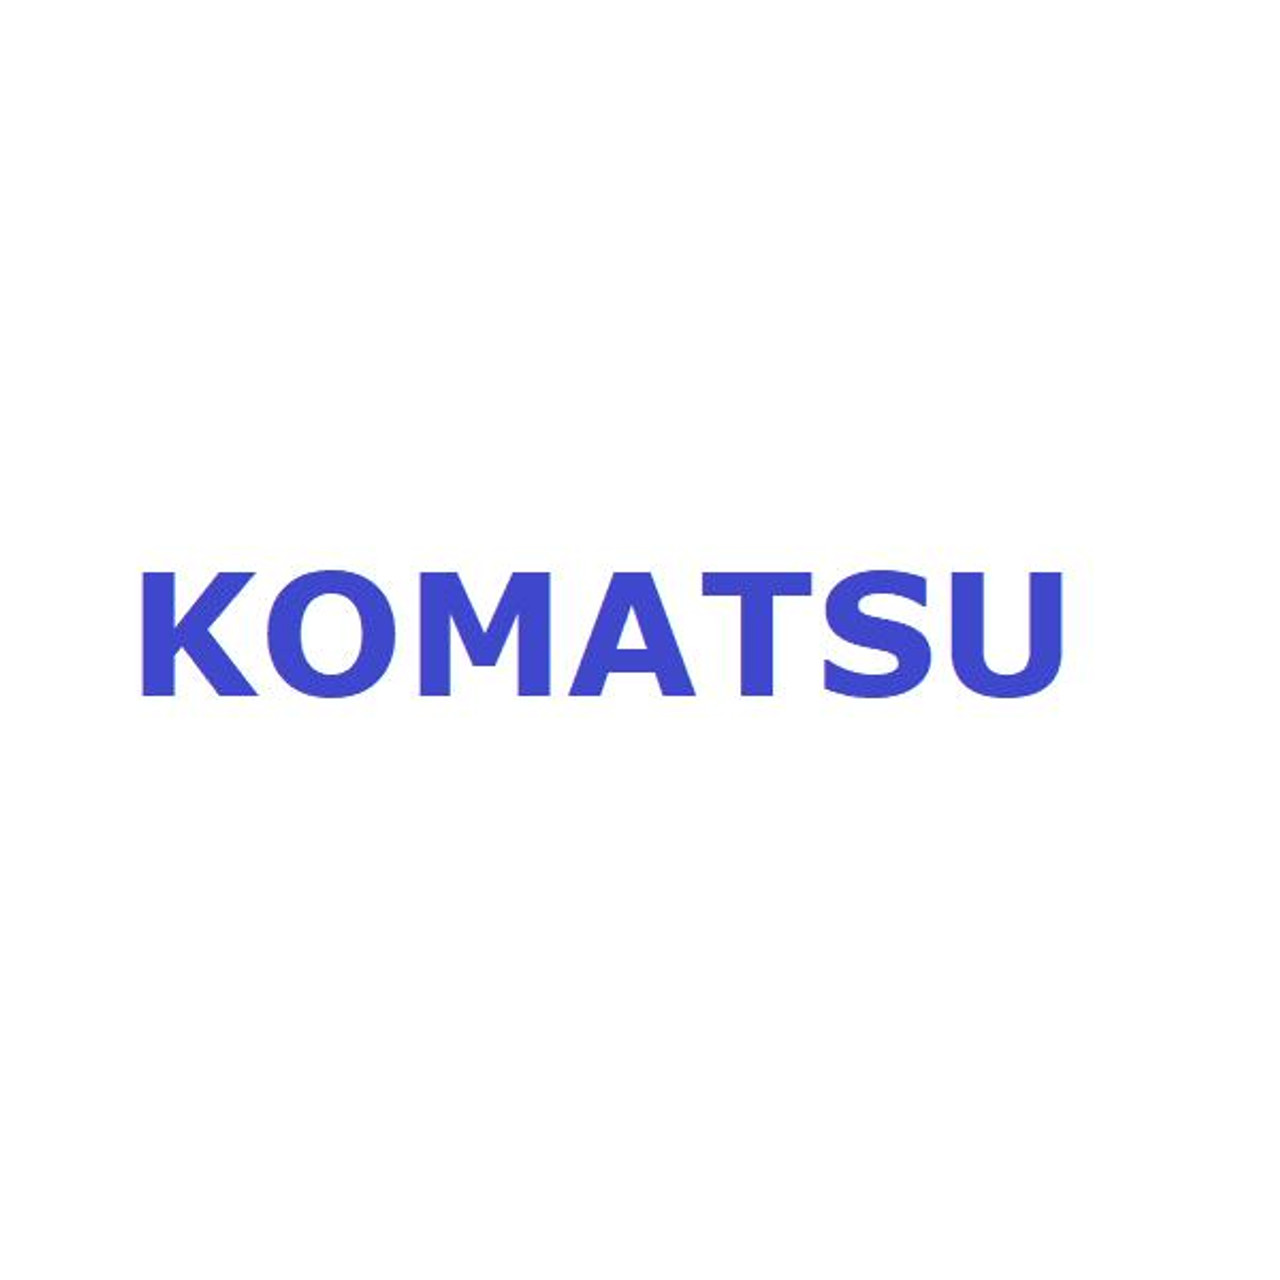 Komatsu Seal # 3EB-64-05020L